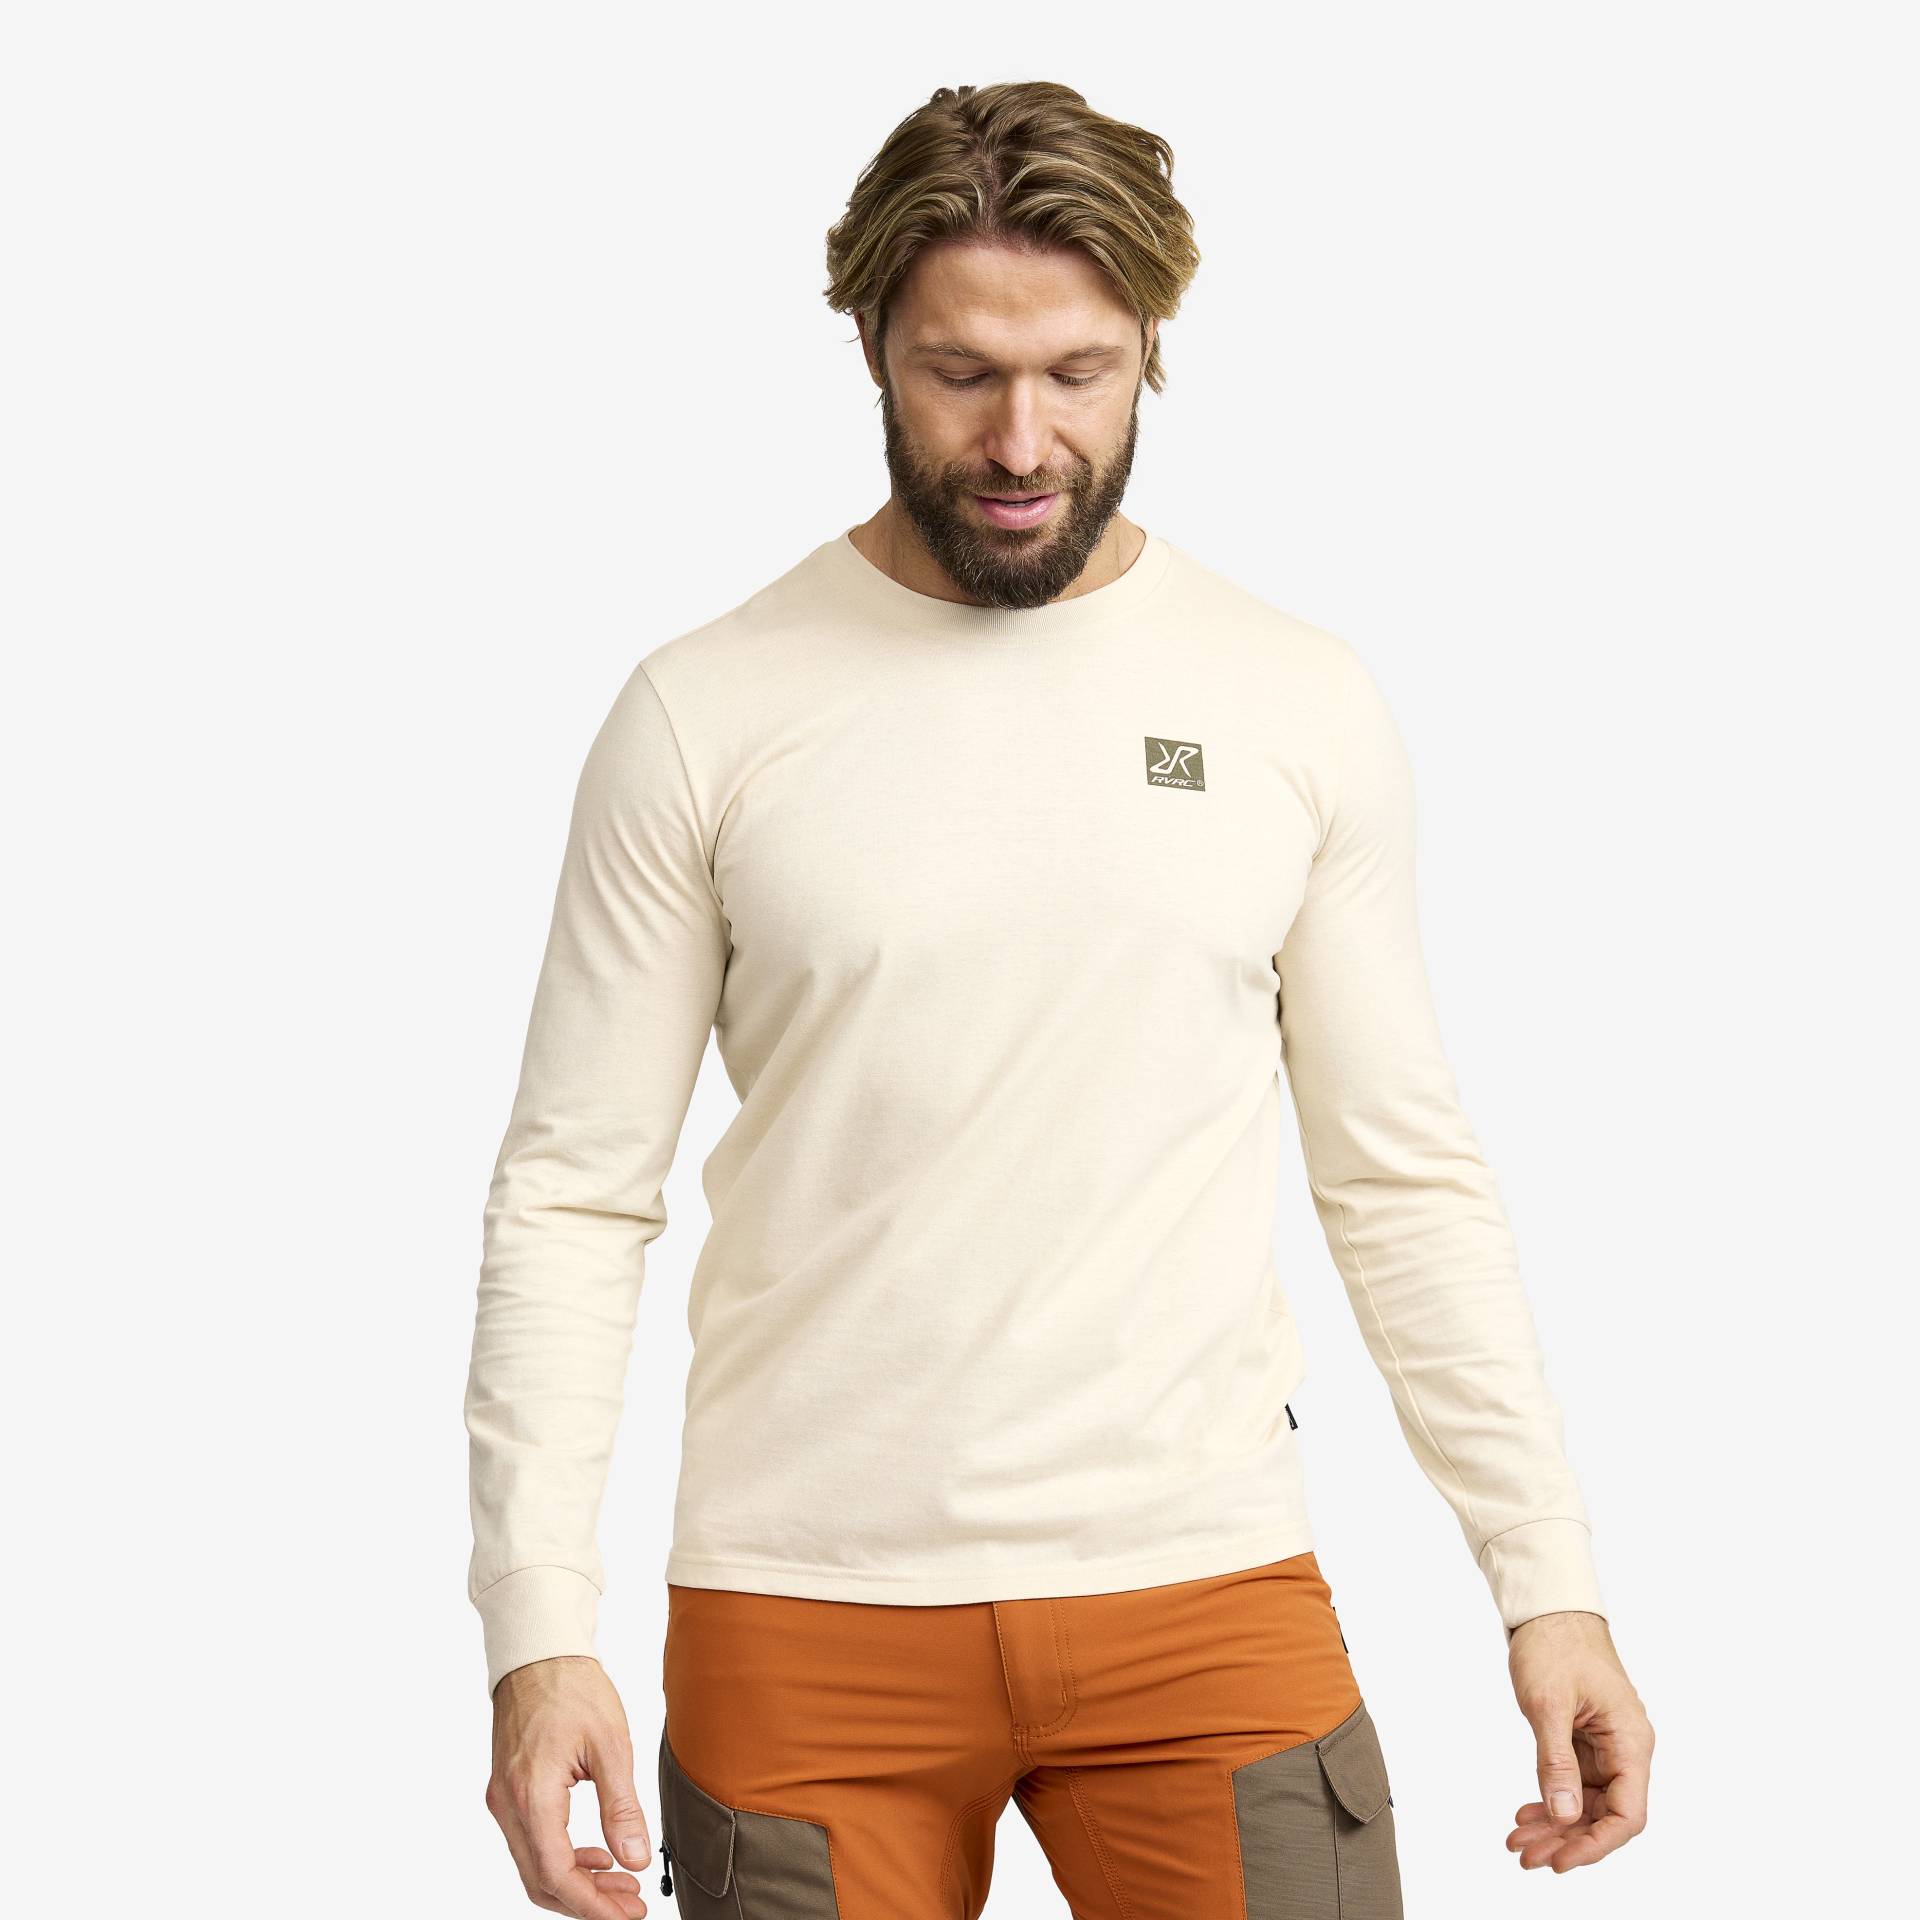 Easy Long-sleeved T-shirt Herren Oatmeal, Größe:XS - Bekleidung > Oberteile > Hemden & Langarmshirts von RevolutionRace